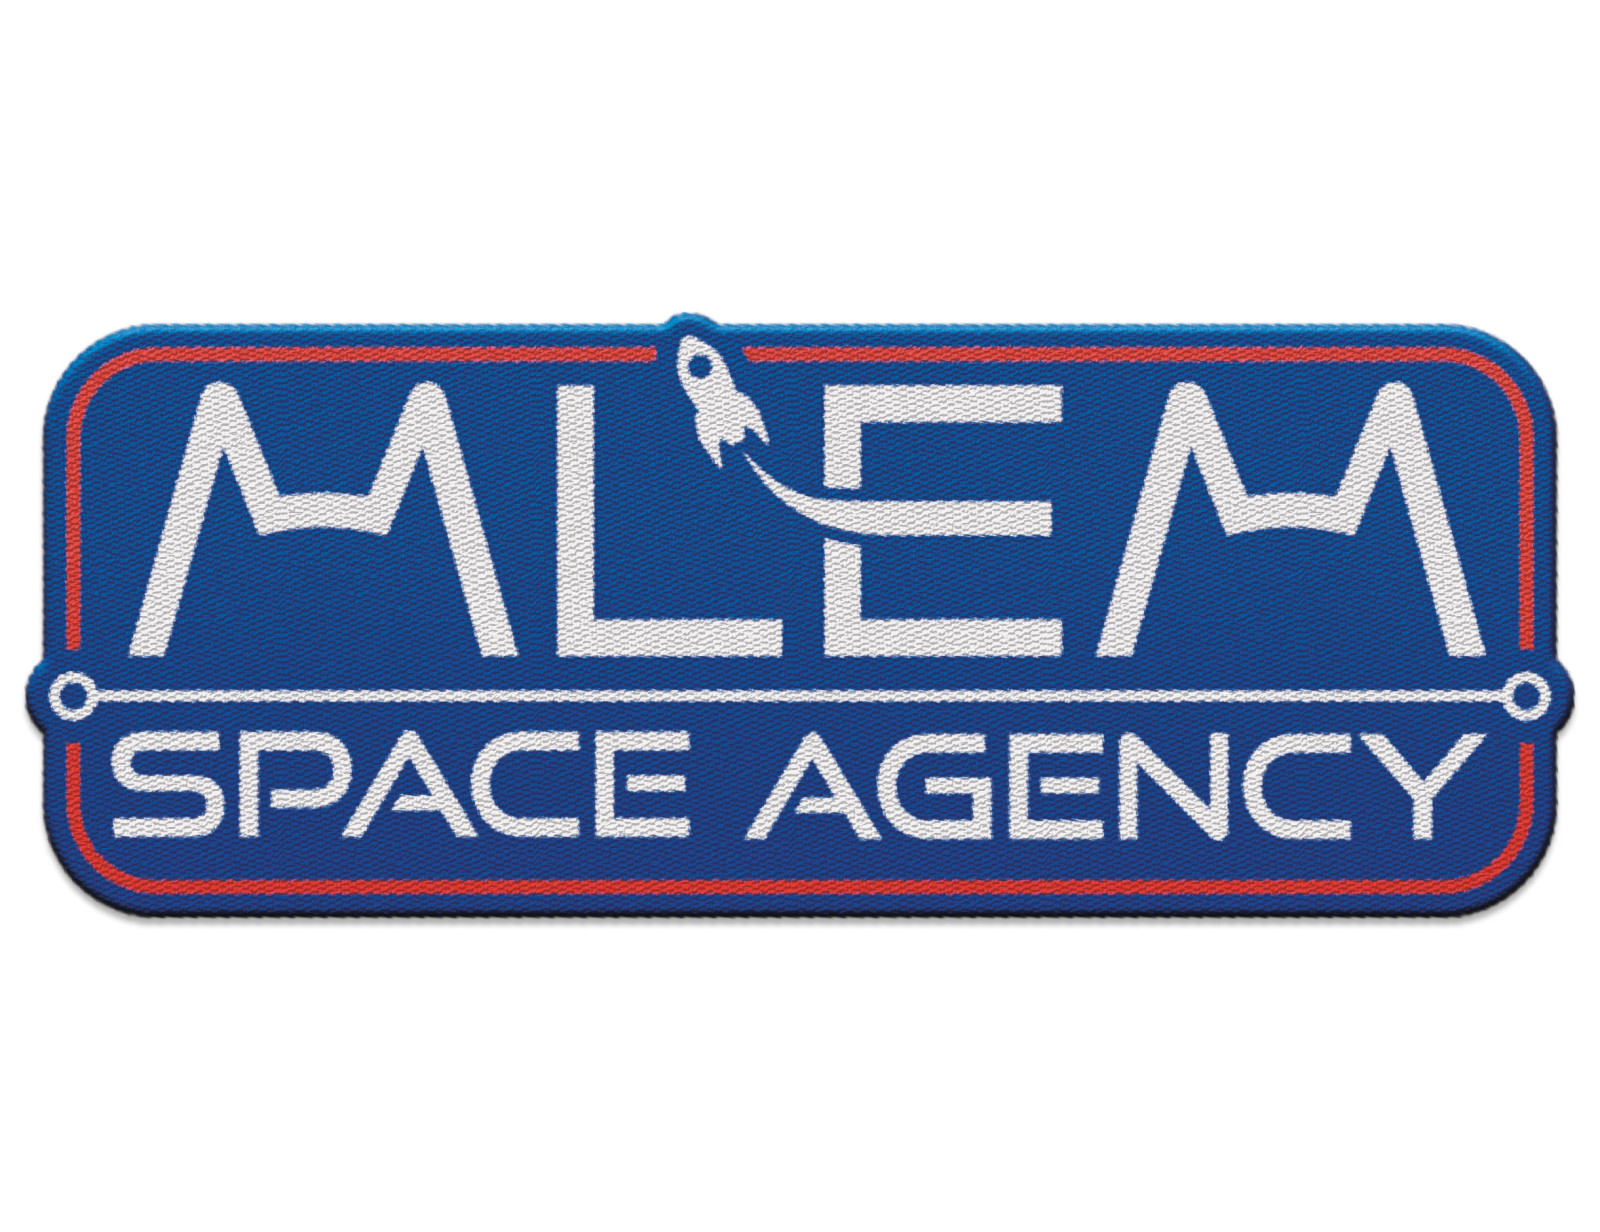 MLEM SPACE AGENCY